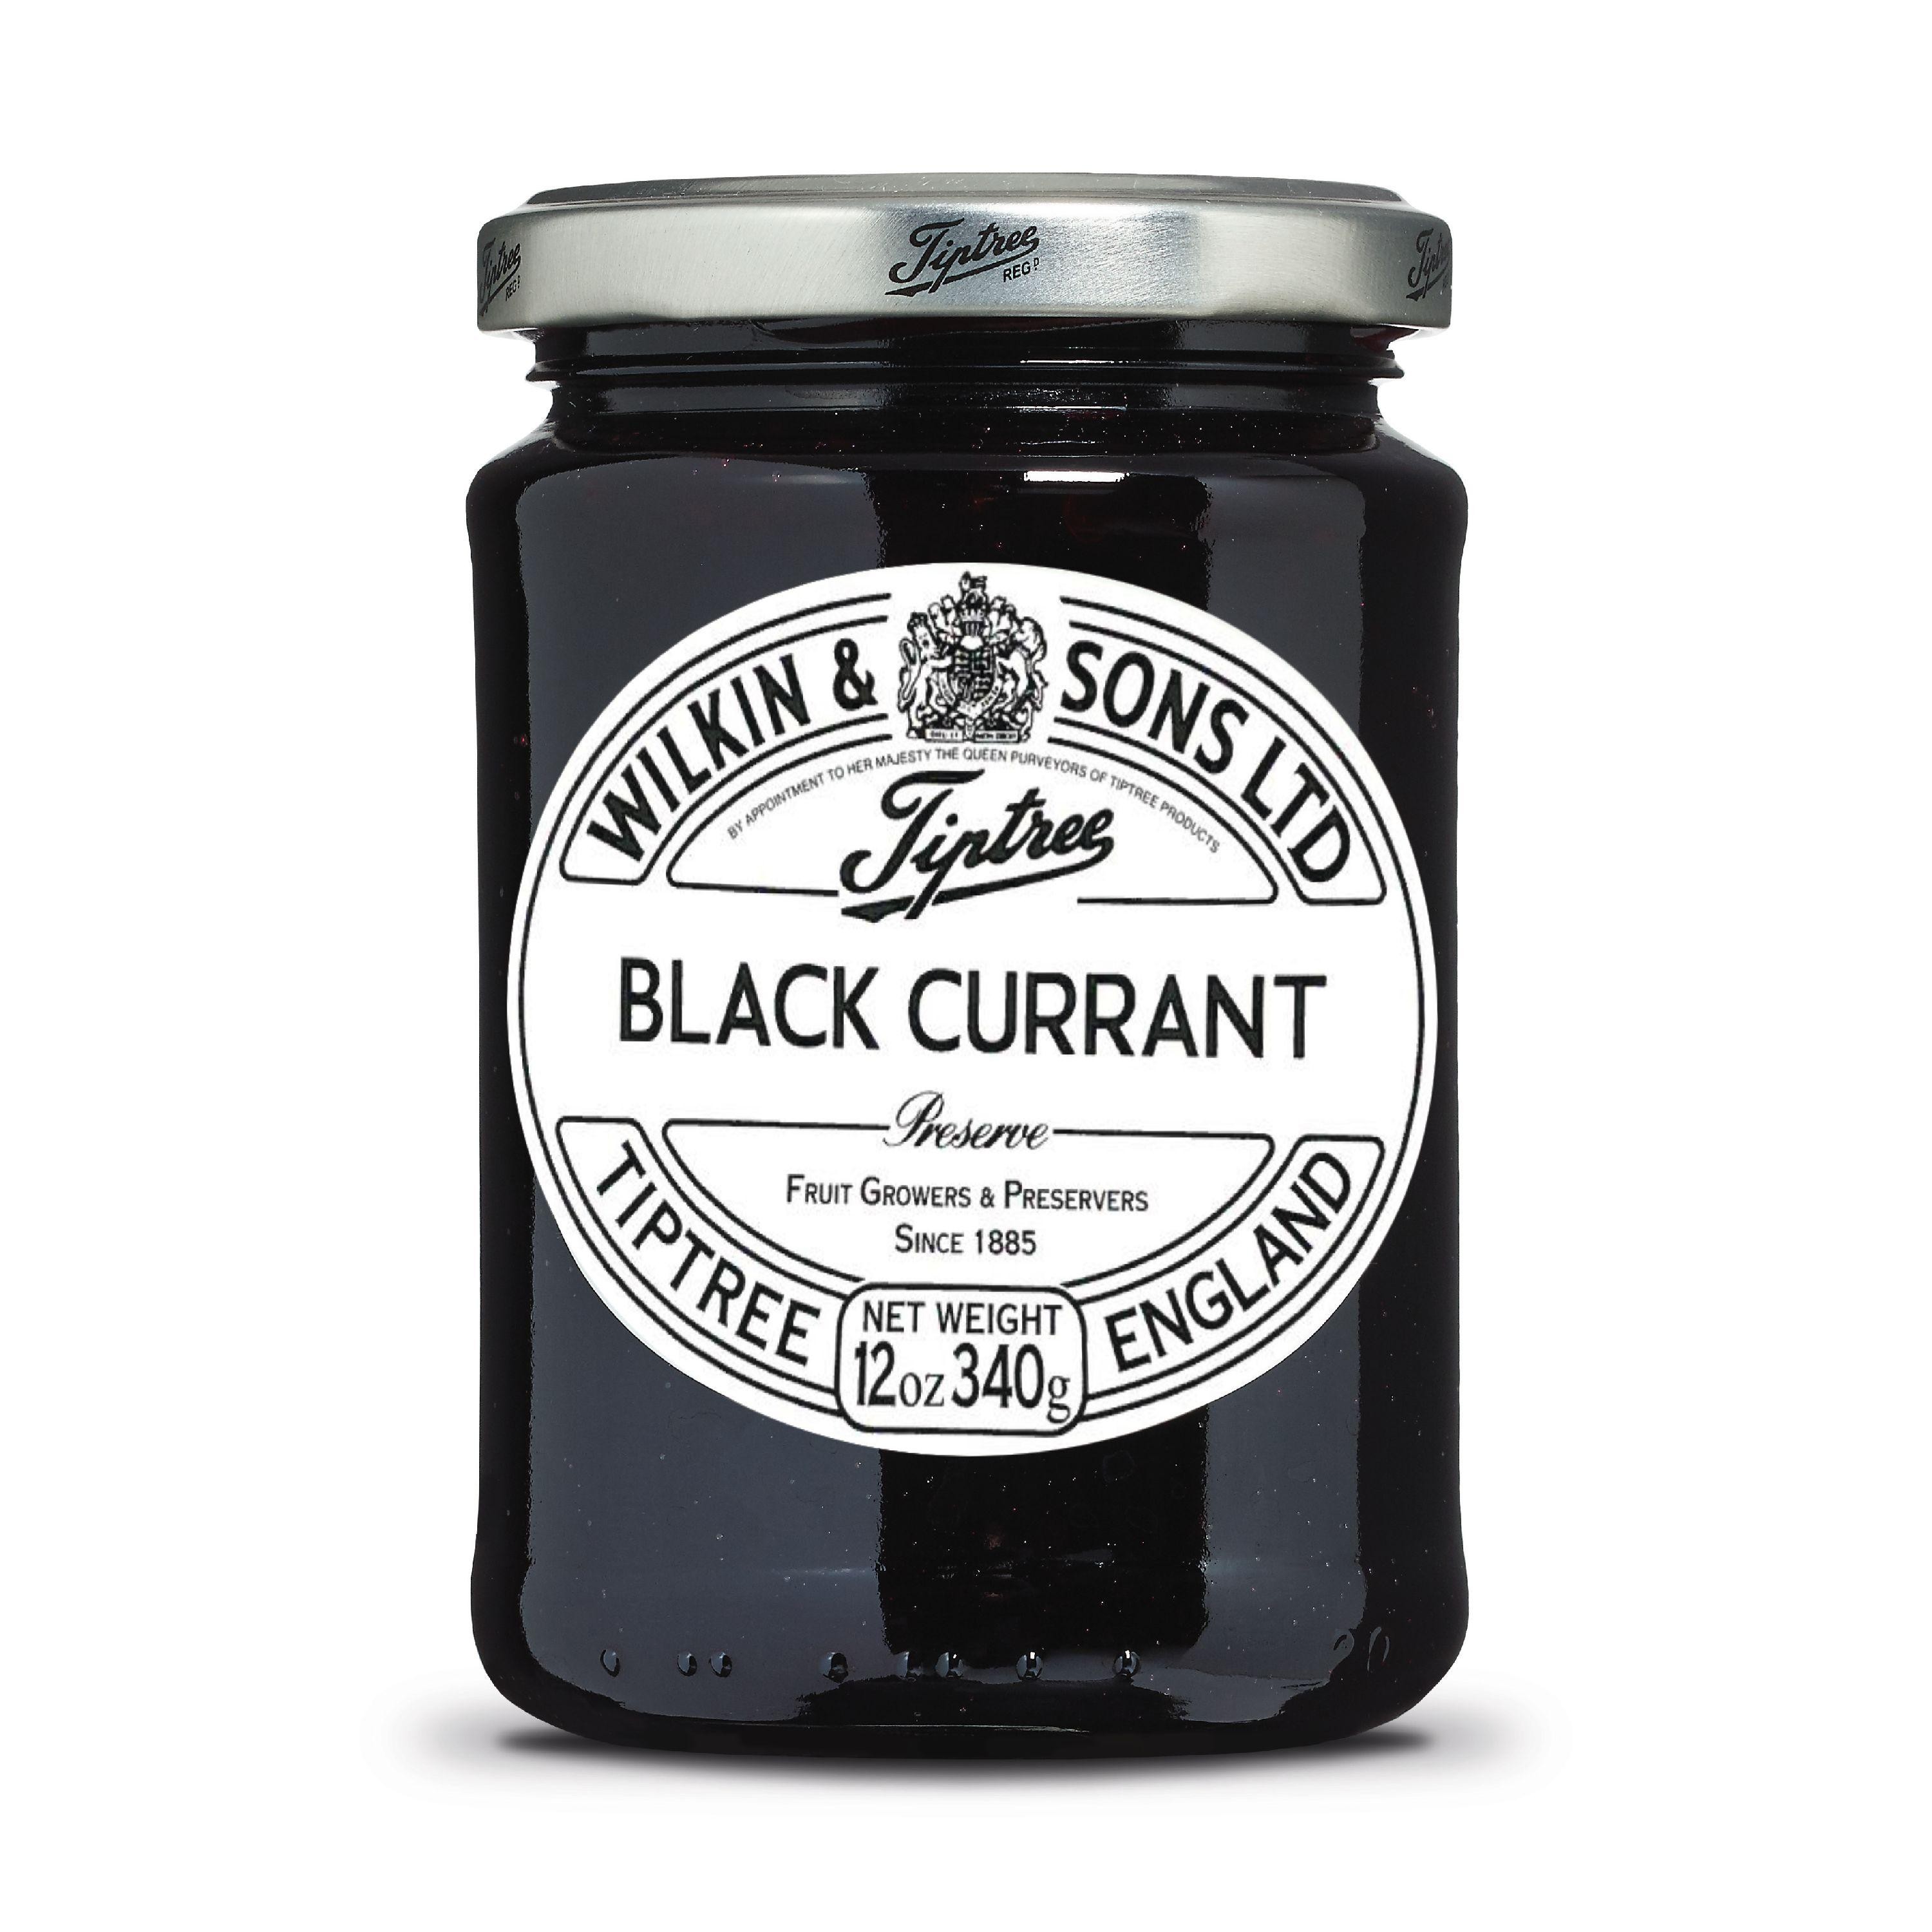 Tiptree Black Currant Preserves